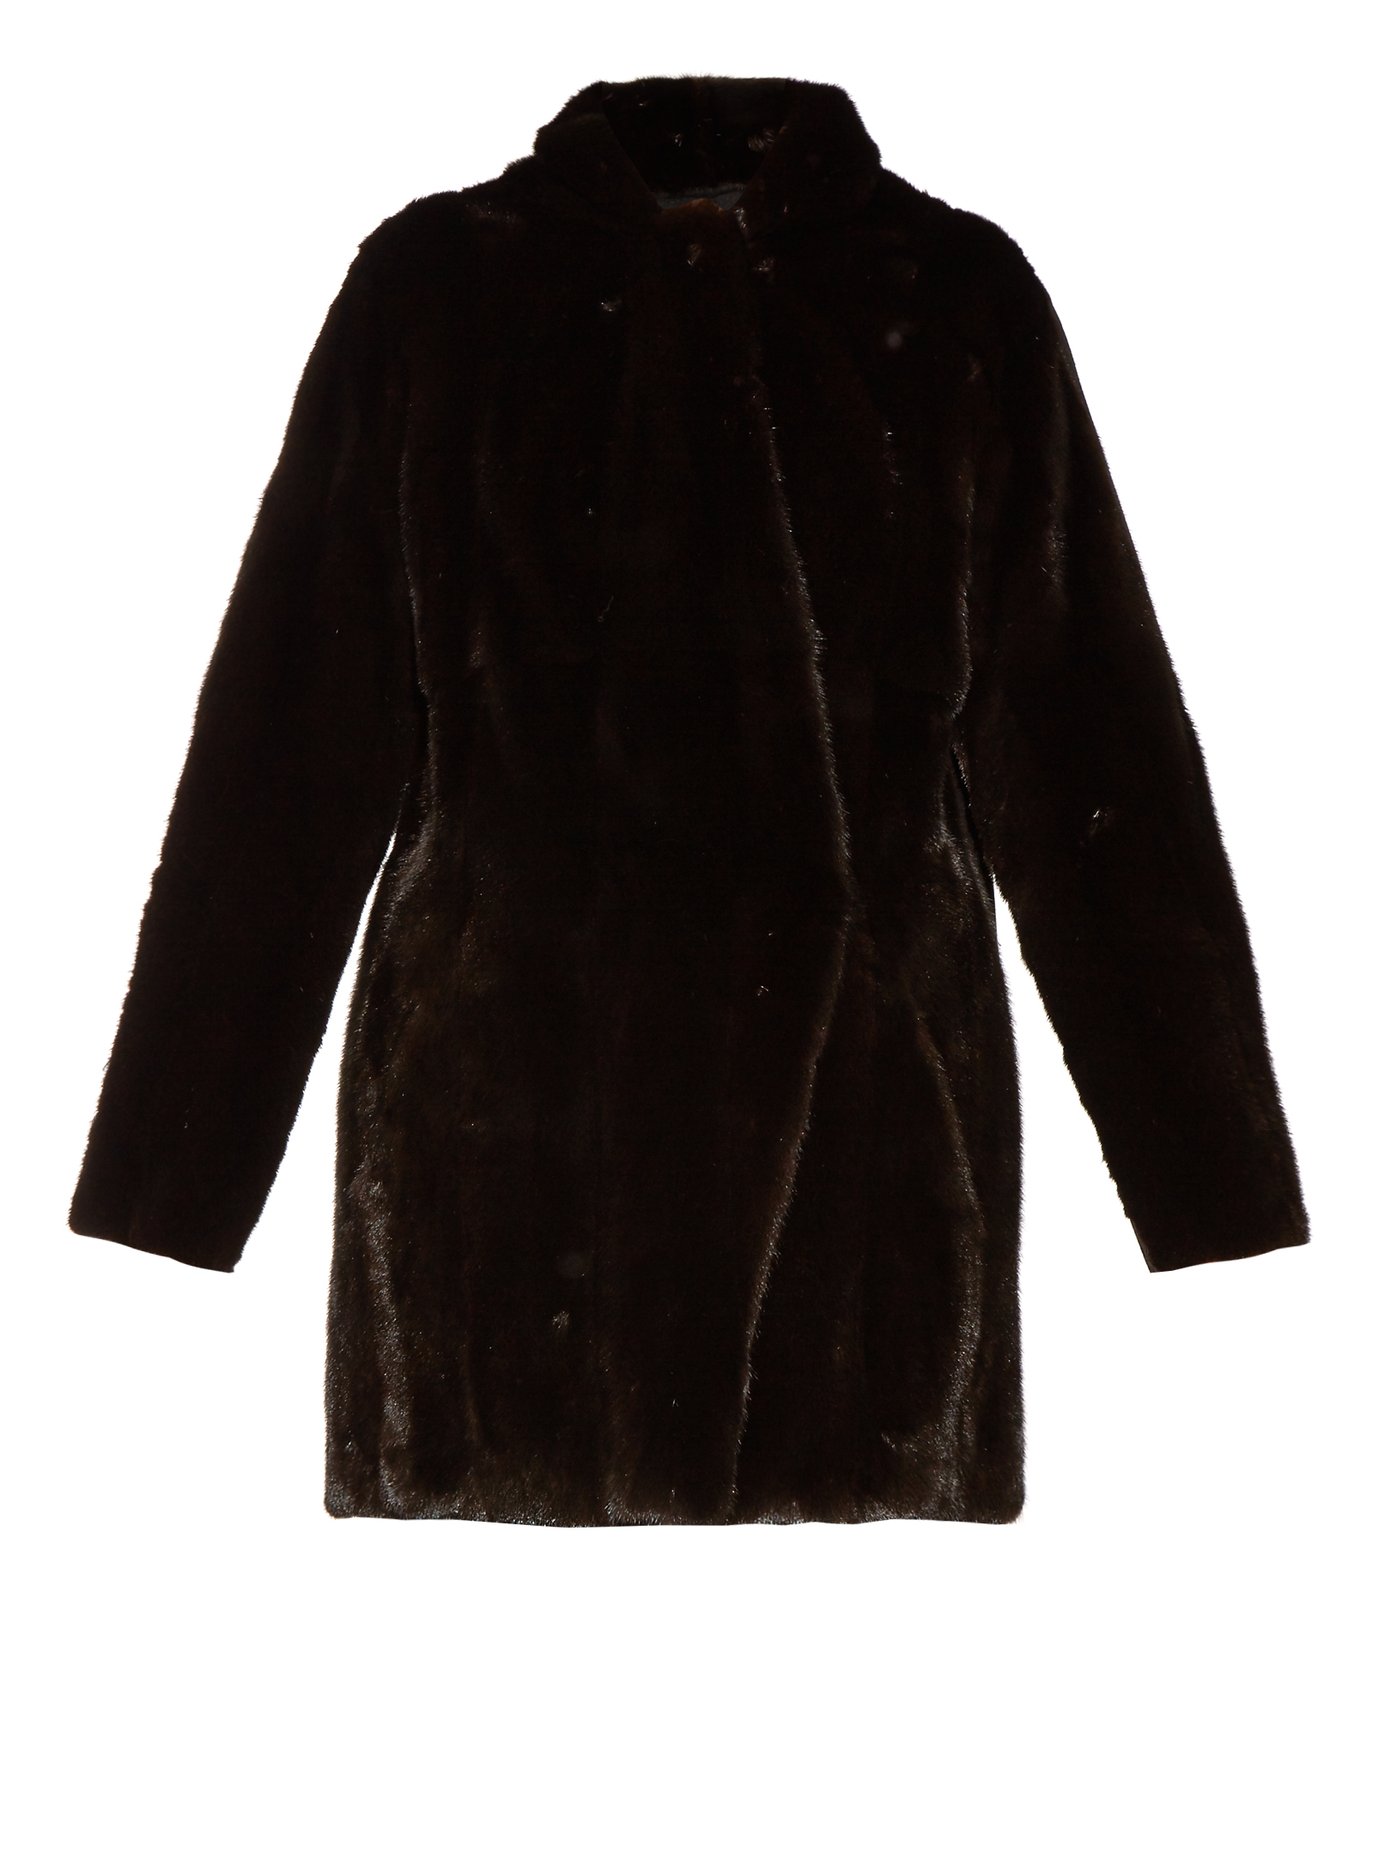 sprung freres black lambskin coat